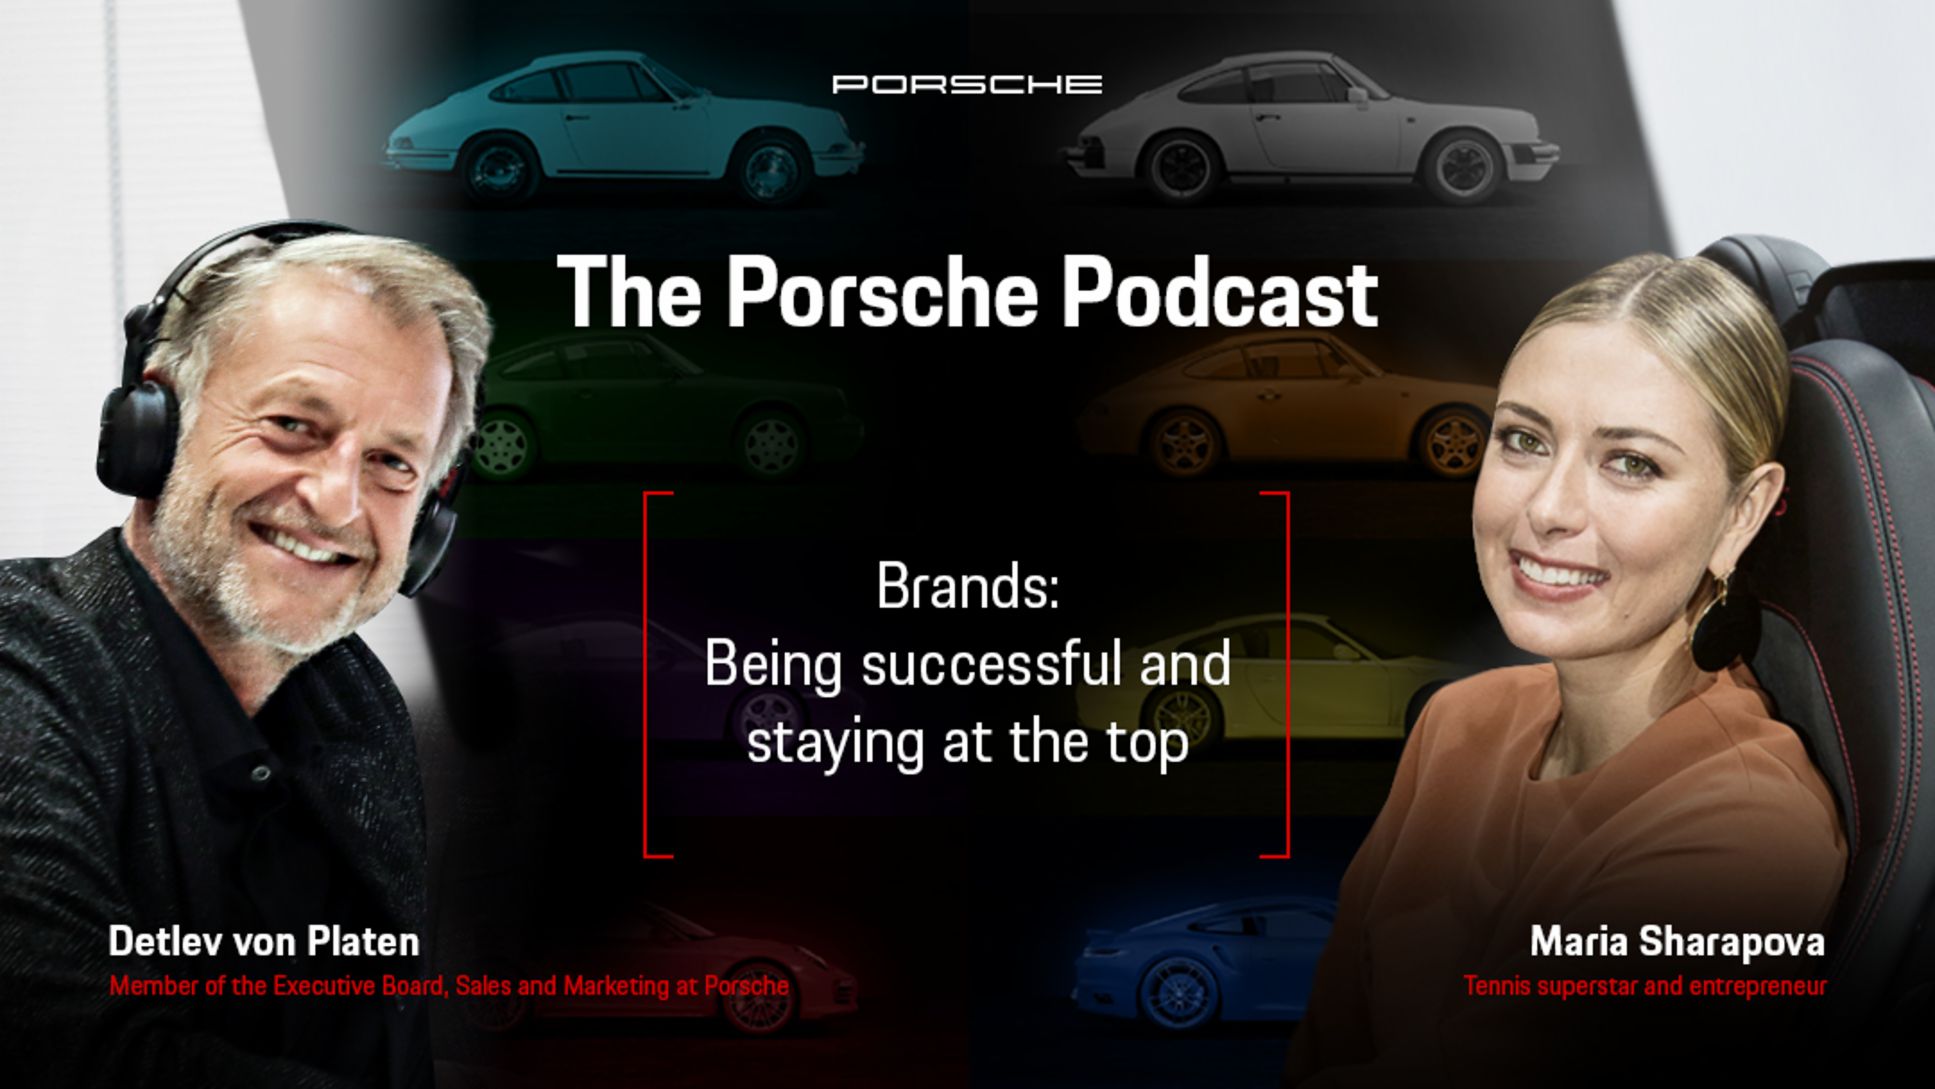 Detlev von Platen, Member of the Executive Board, Sales and Marketing, Maria Sharapova, Tennis superstar, l-r, The Porsche Podcast, episode 1, 2020, Porsche AG